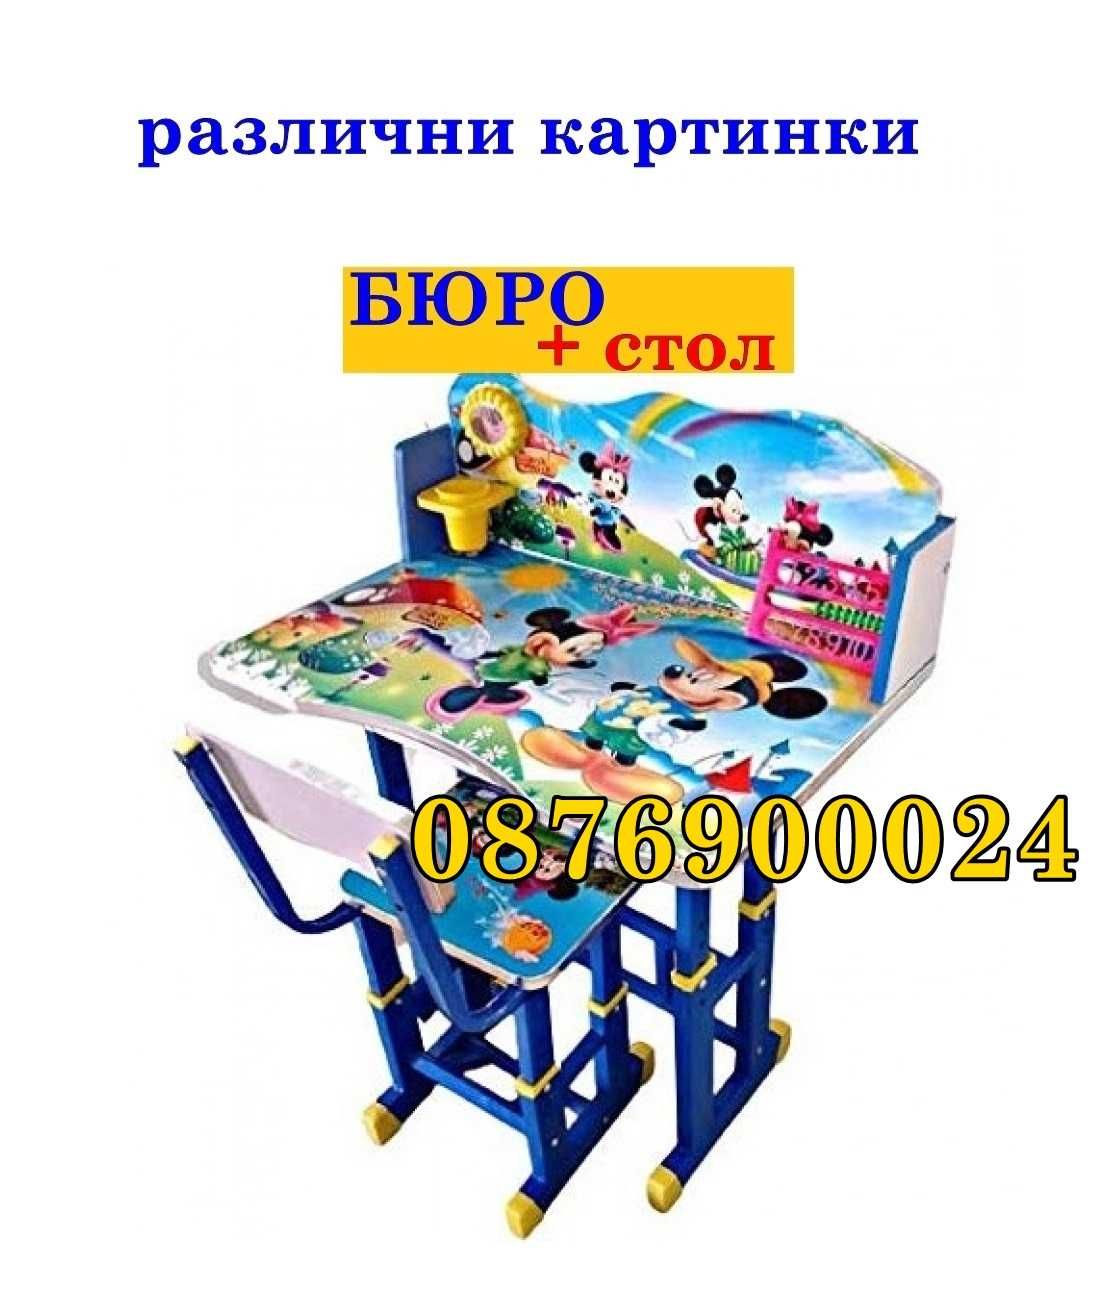 ПРОМО Детско бюро със стол Детски чин и столче Принцеси Маша Пони и др